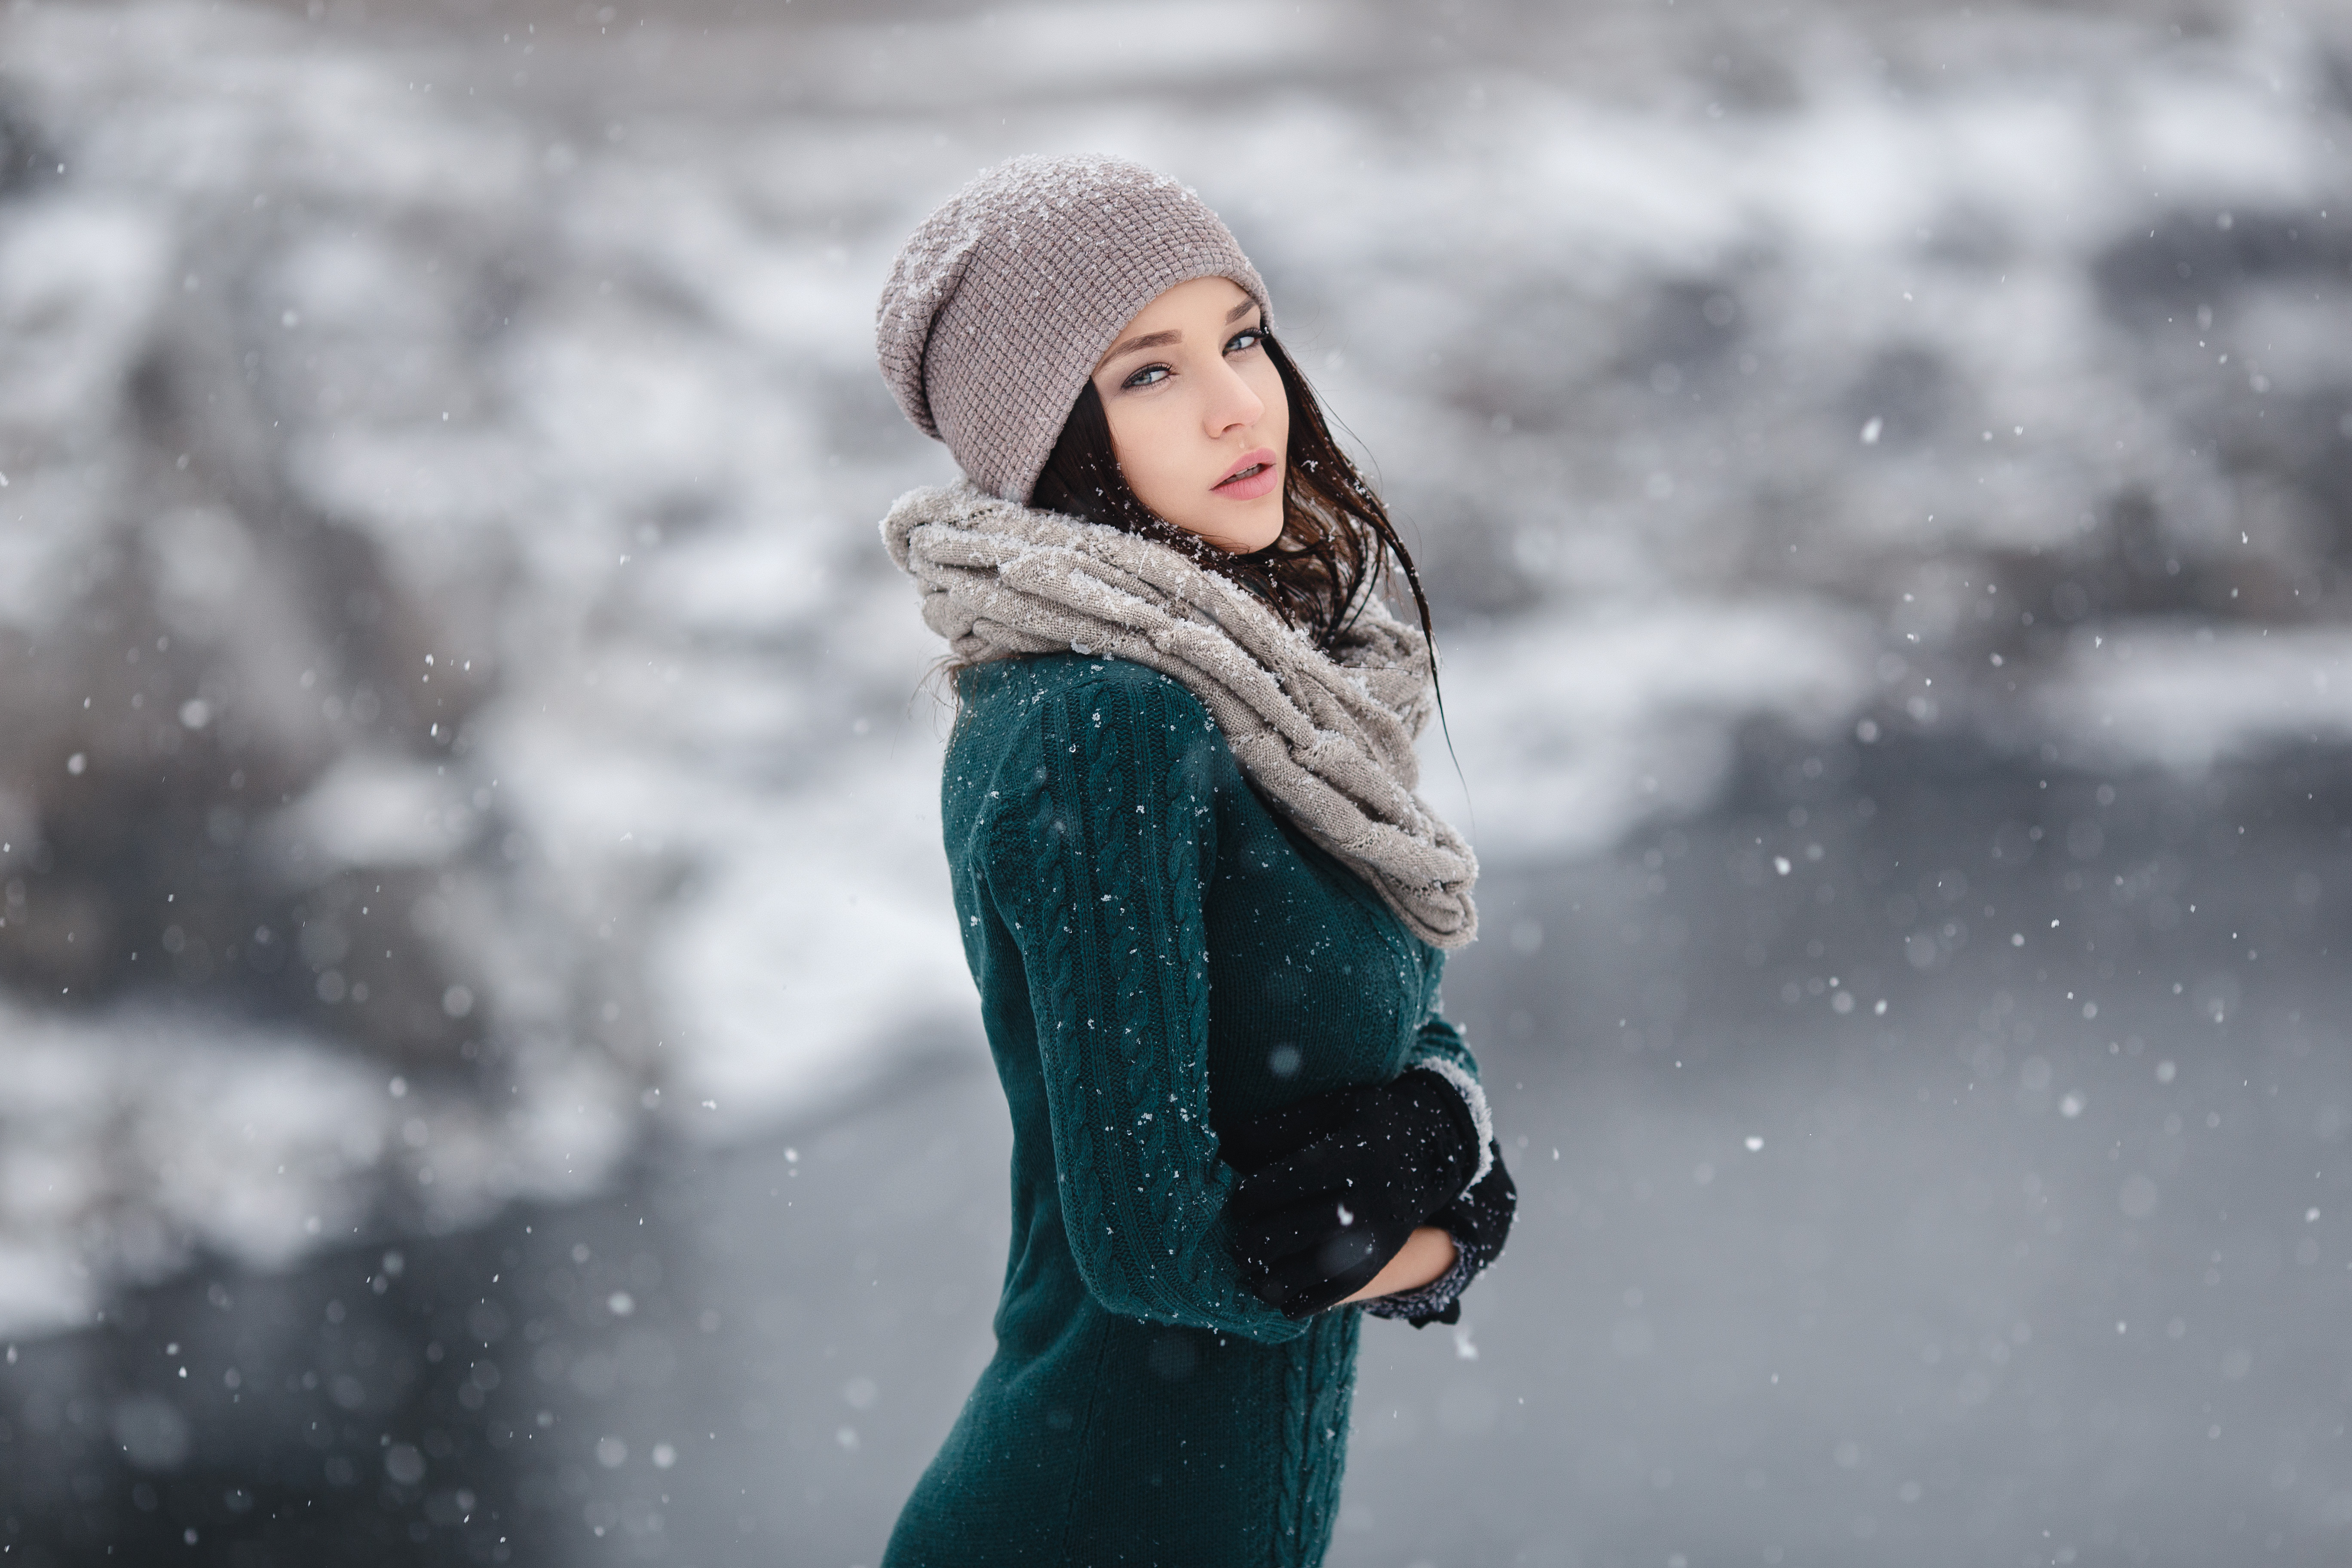 angelina petrova, women, hat, model, scarf, snowfall, winter